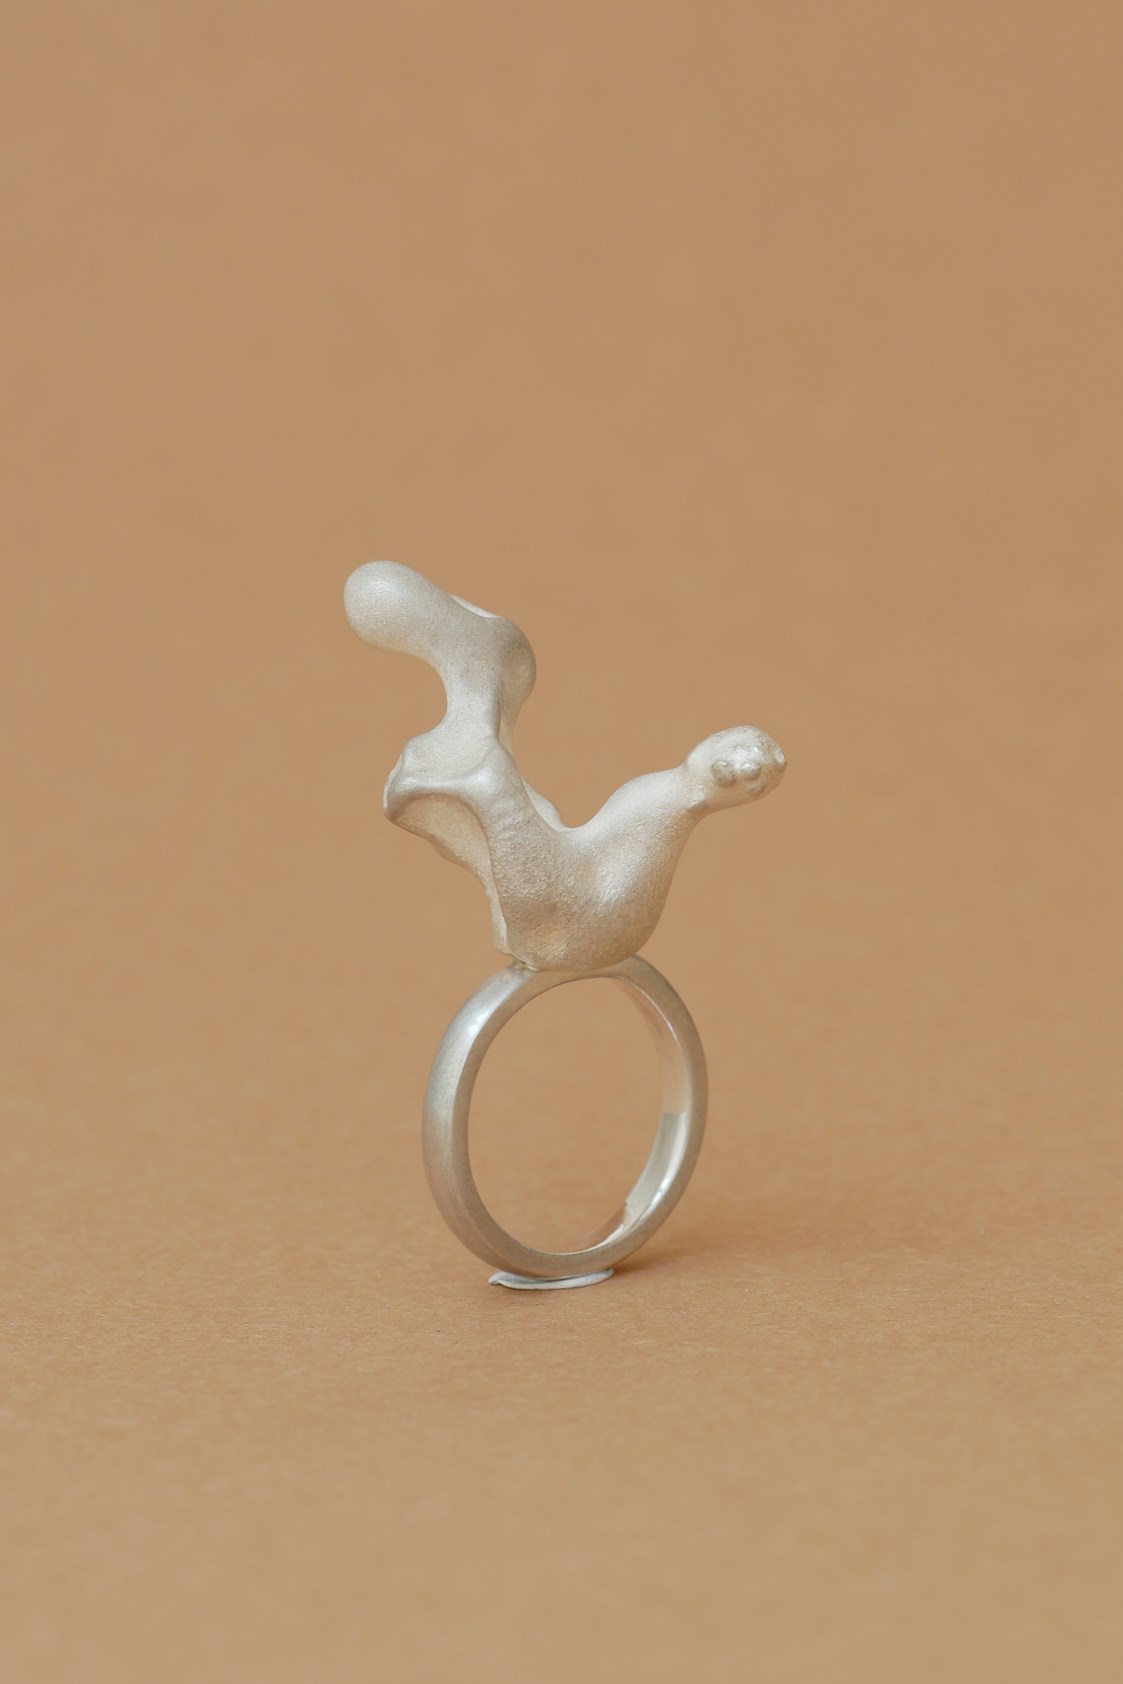 Unternehmen: TUKOA Kollektion "Coral Embrace". Ring aus Silber, RW52. - TUKOA Jewellery Design